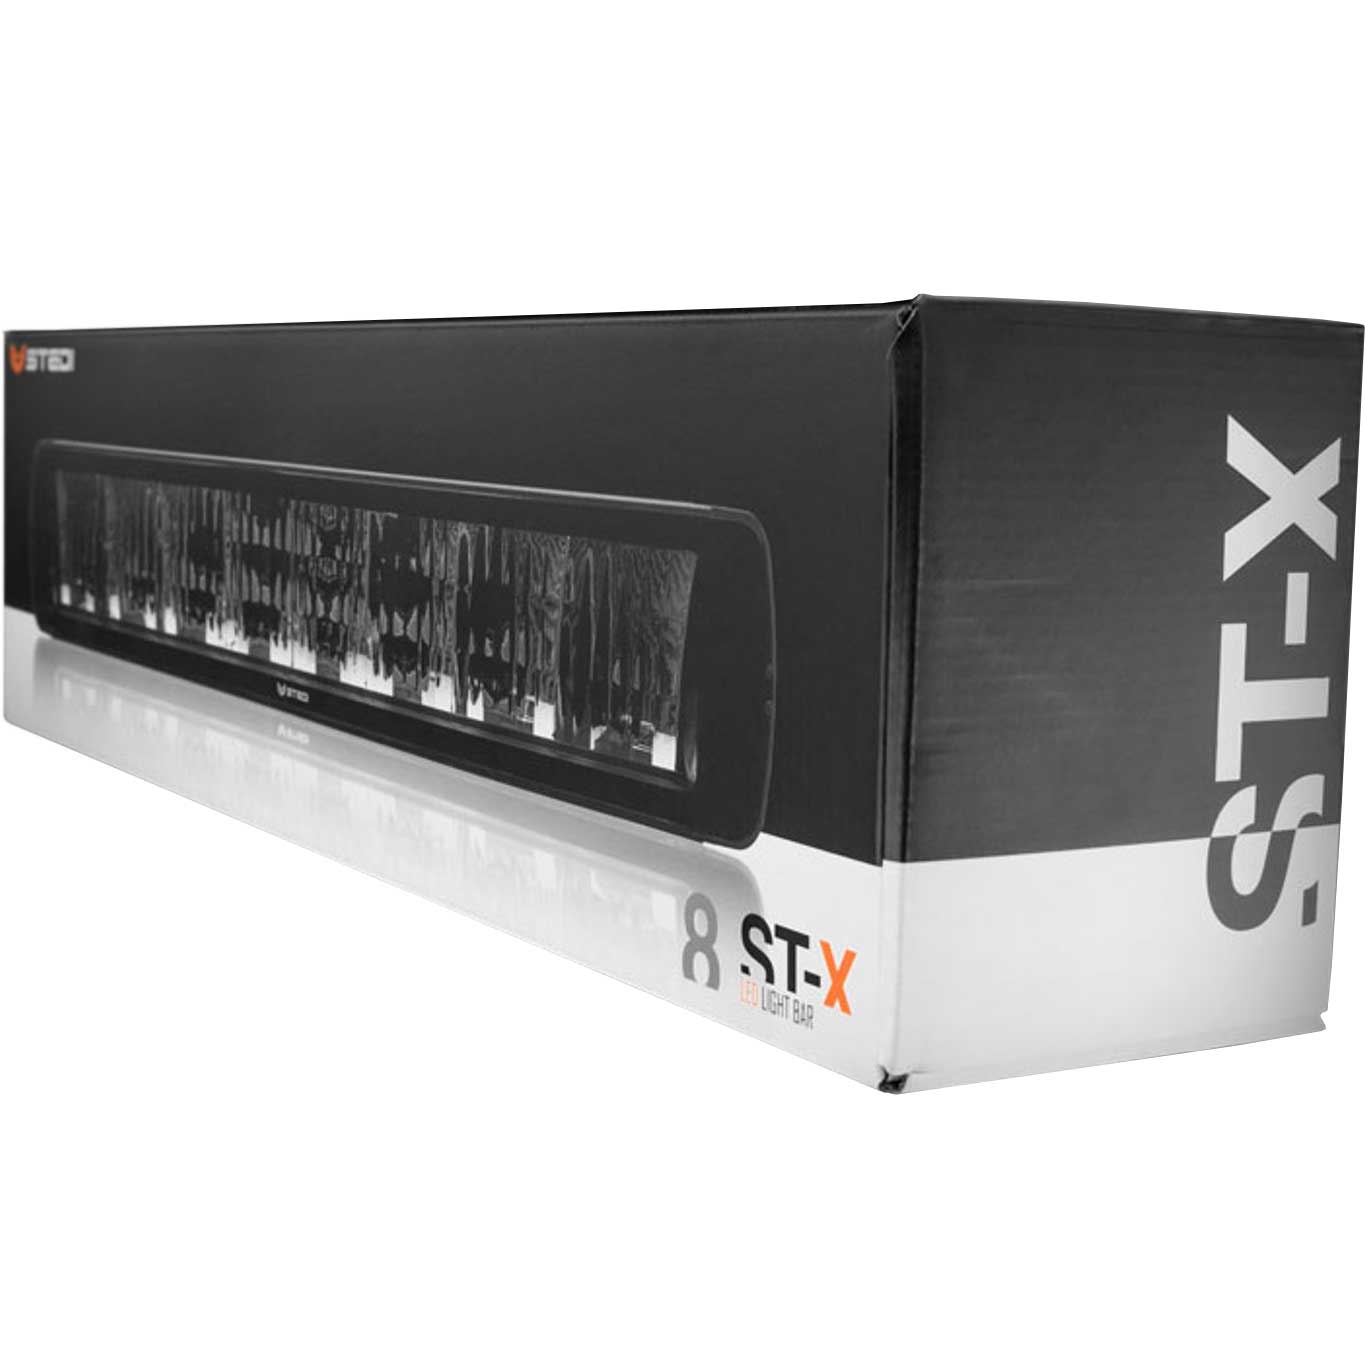 Stedi ST-X light bar box